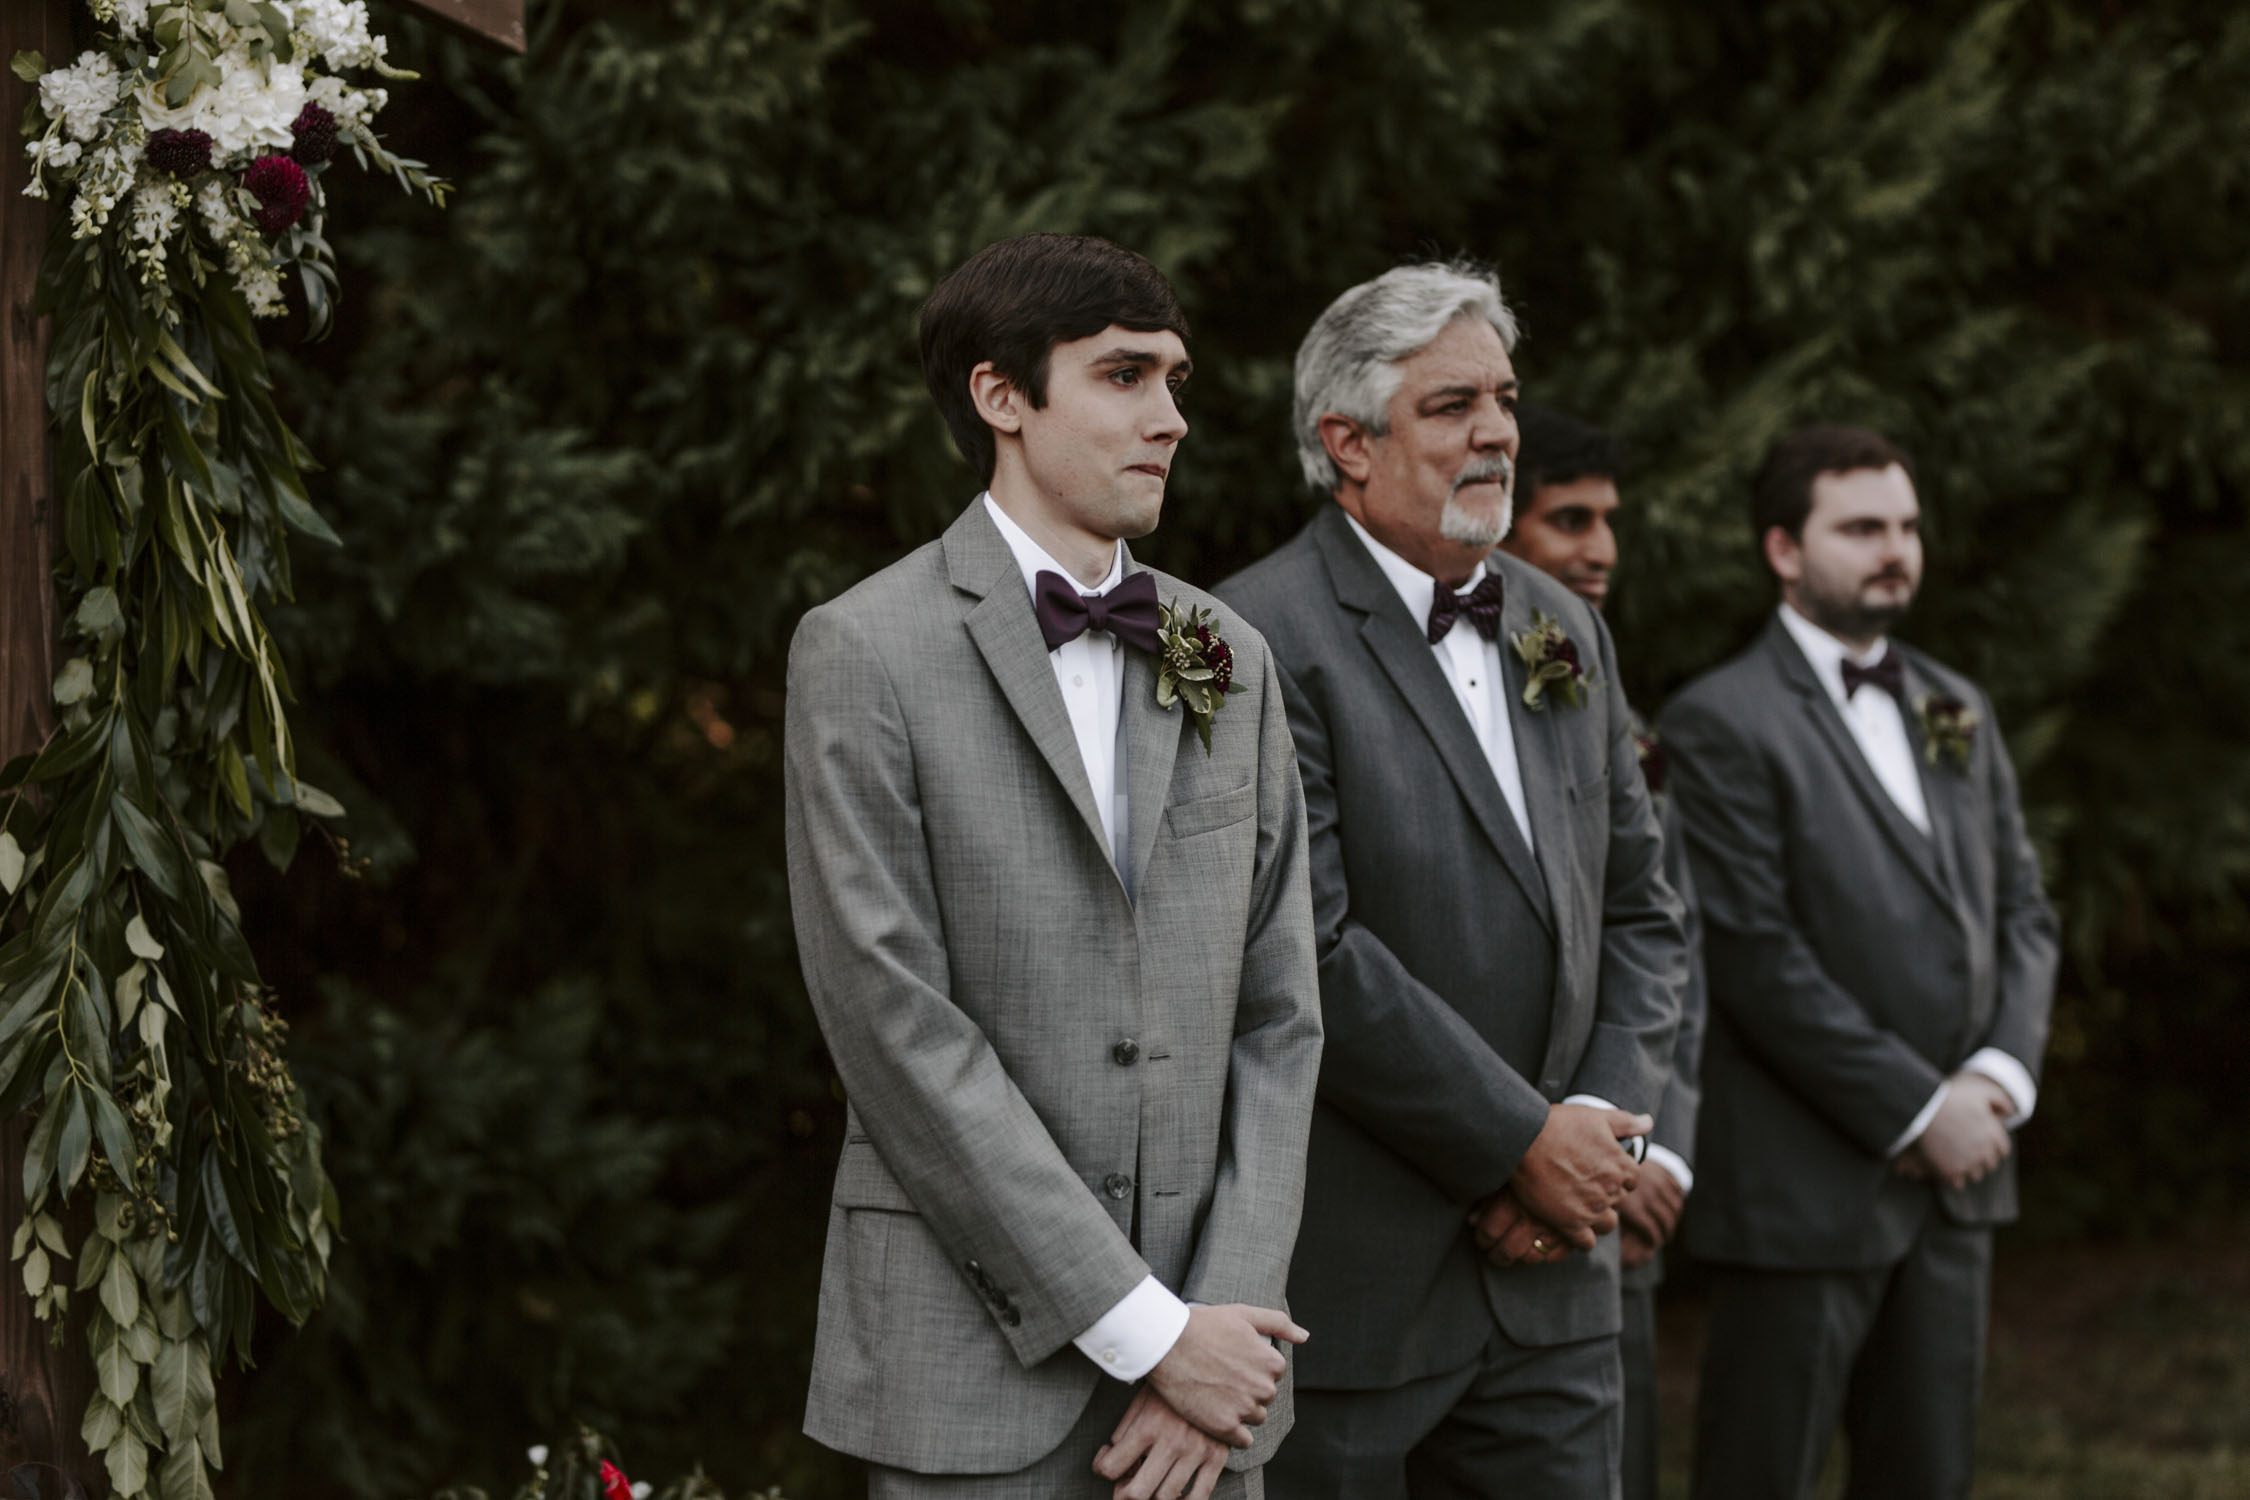 Chapel Hill Wedding getting ready photos | Kayli LaFon Photography, North Carolina Intimate Wedding Photographer